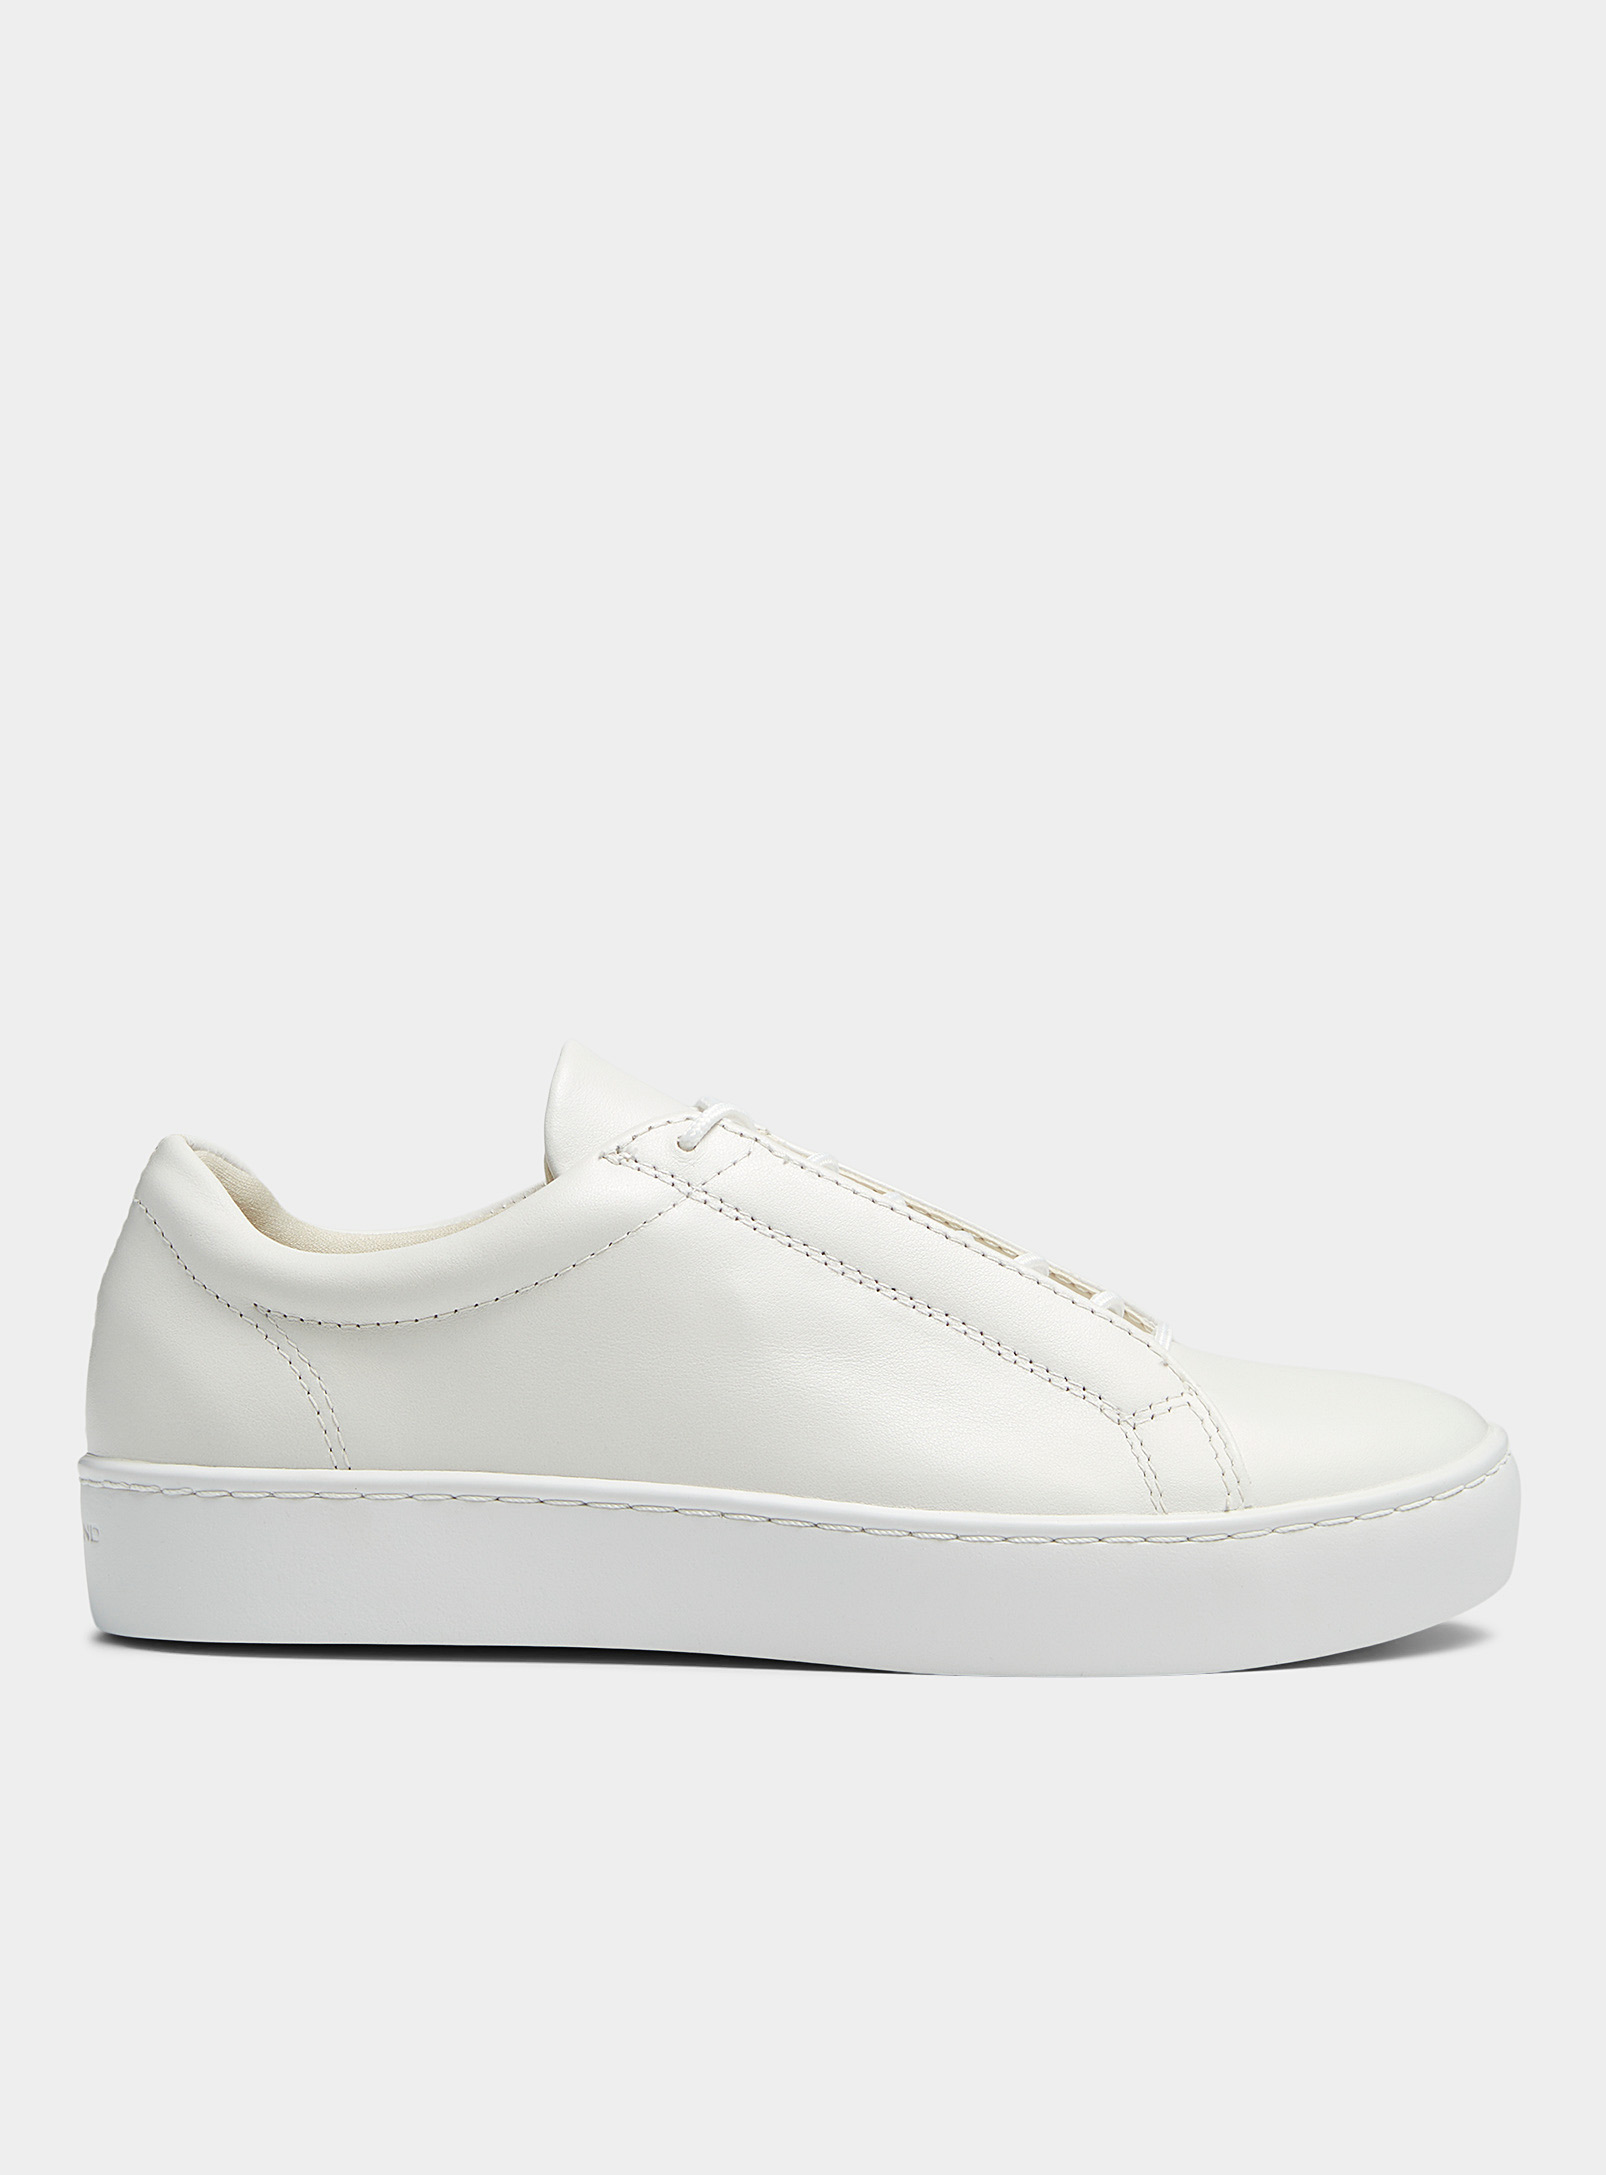 Vagabond Shoemakers - Women's Zoe minimalist white sneakers Women